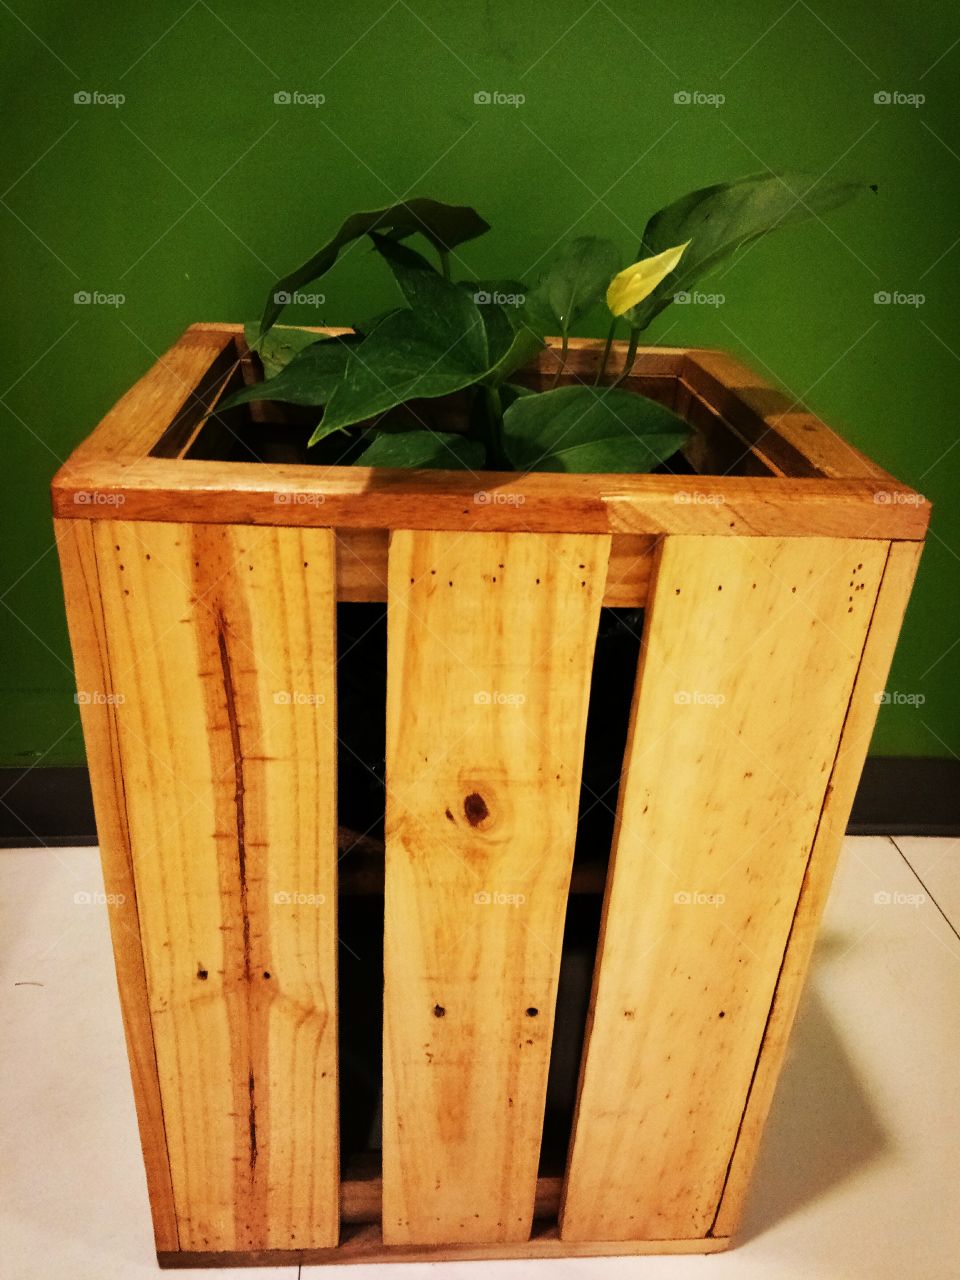 box
wood
flower